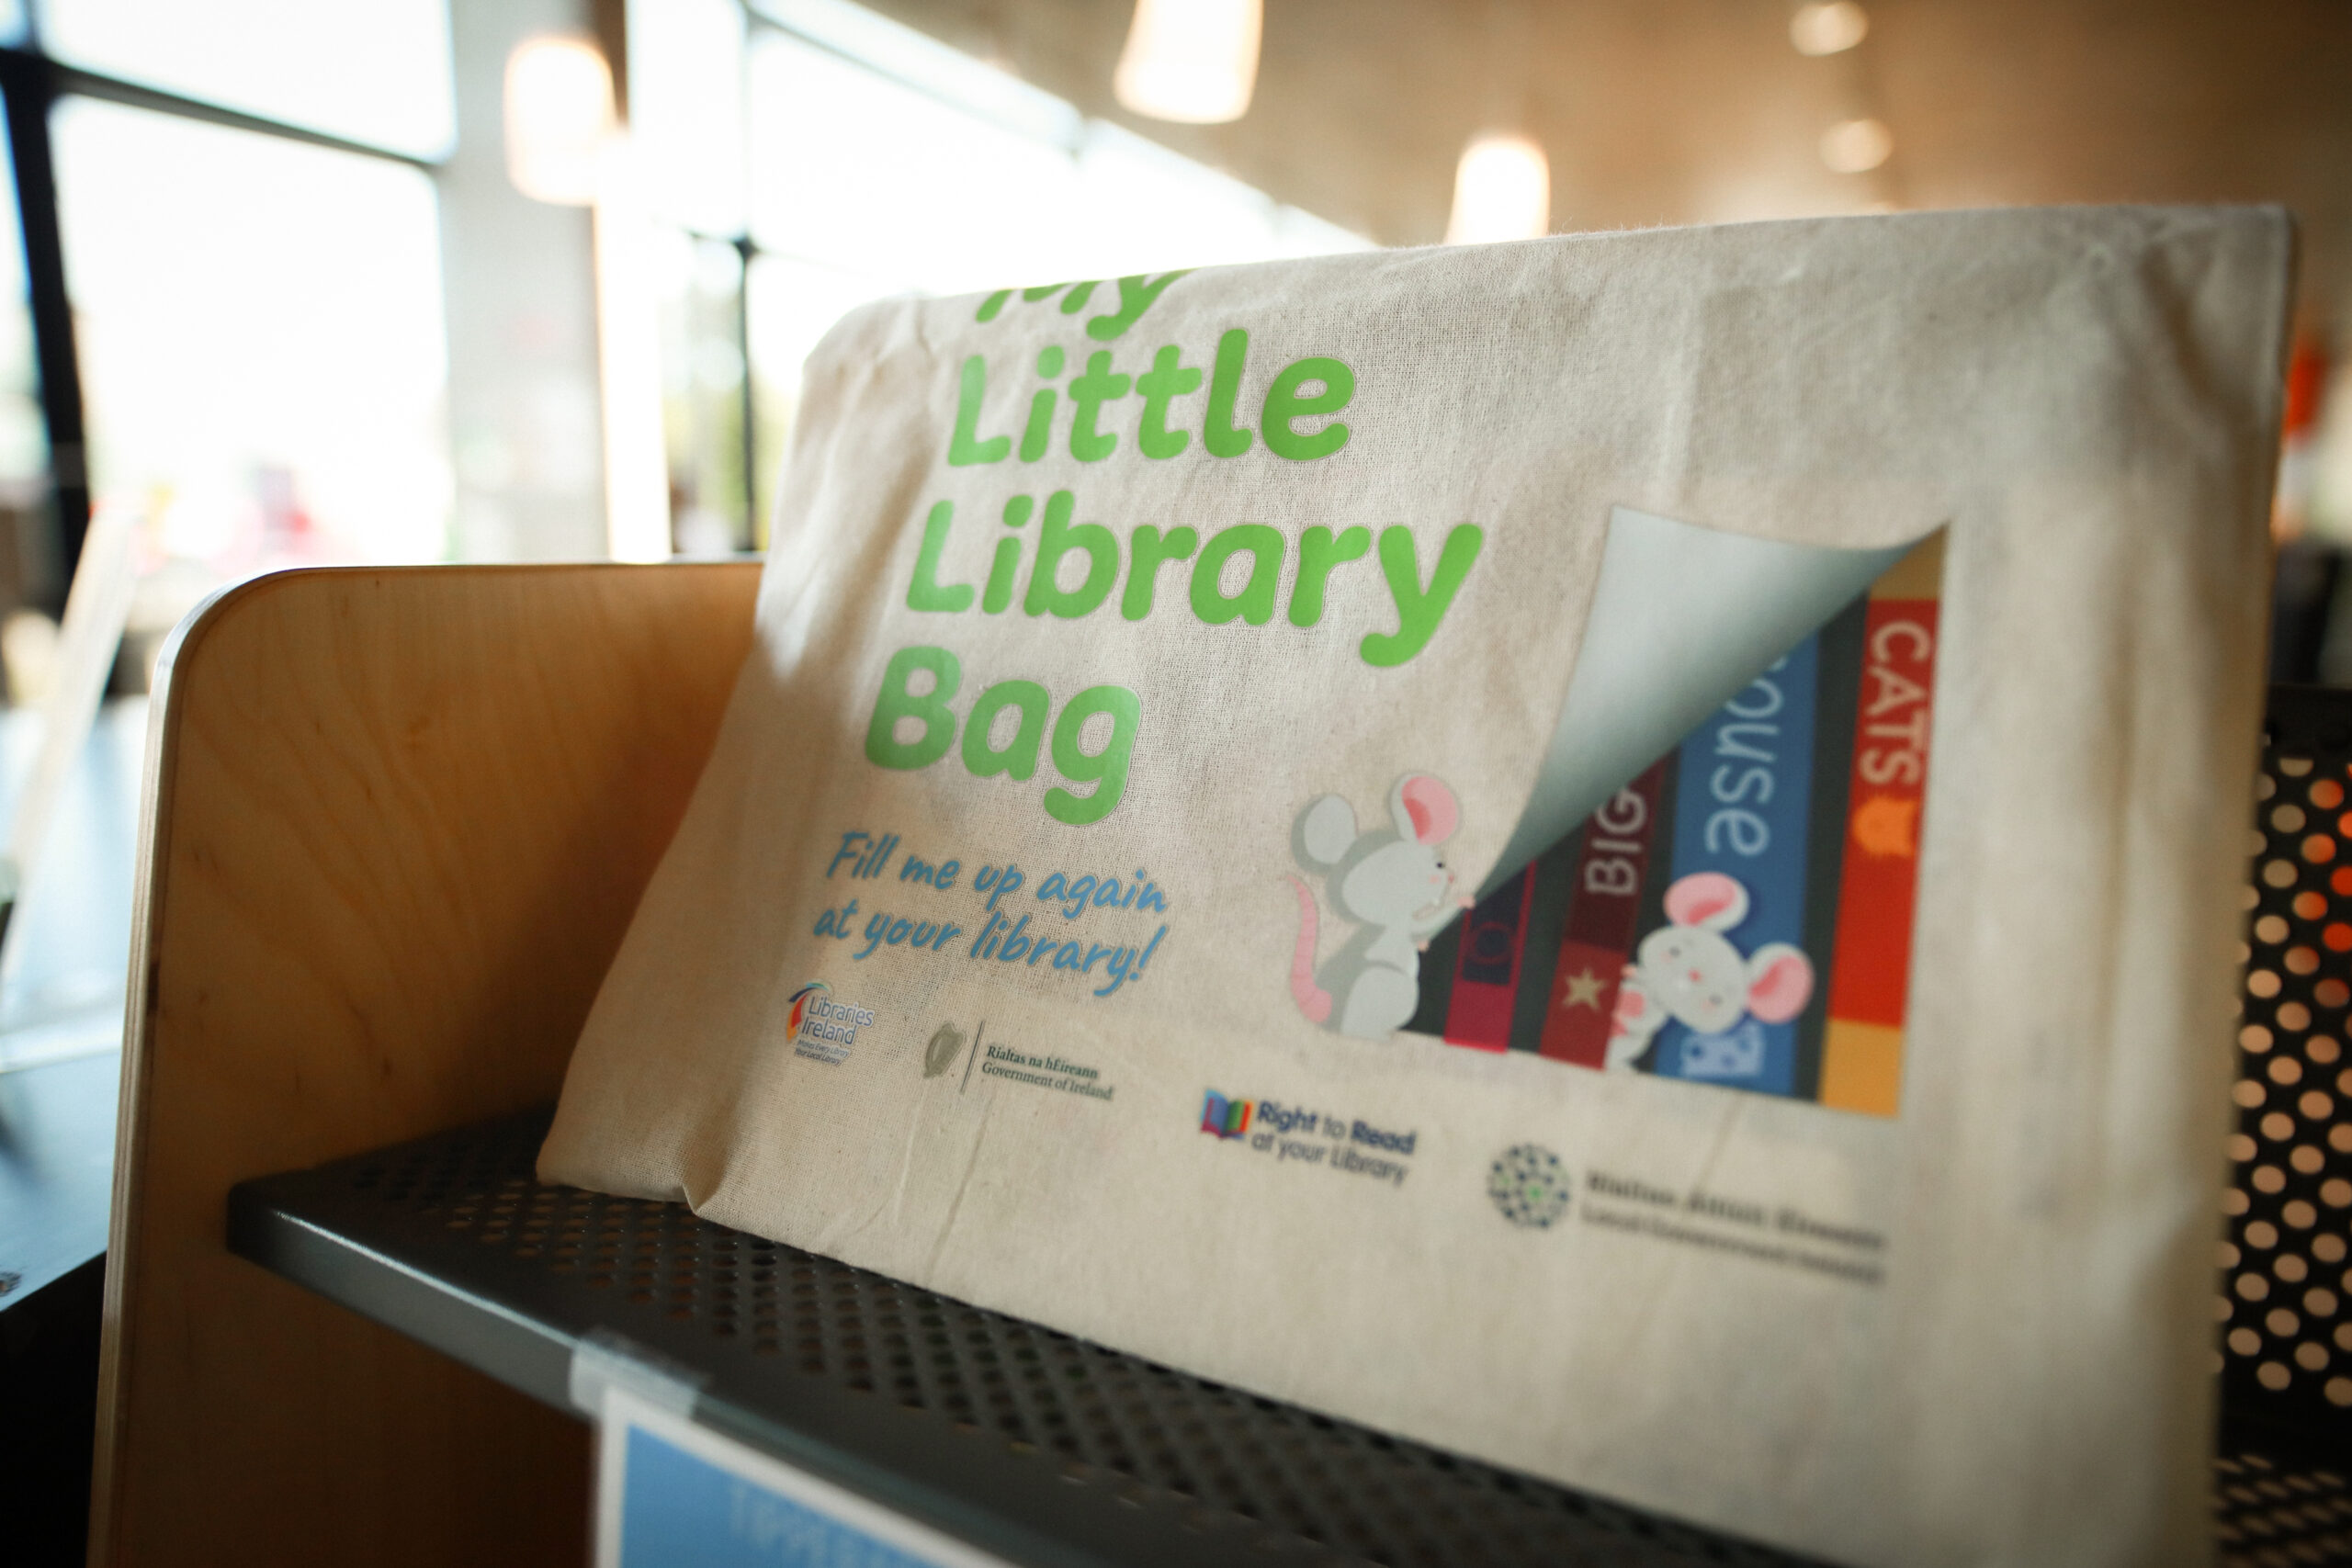 Little library bag